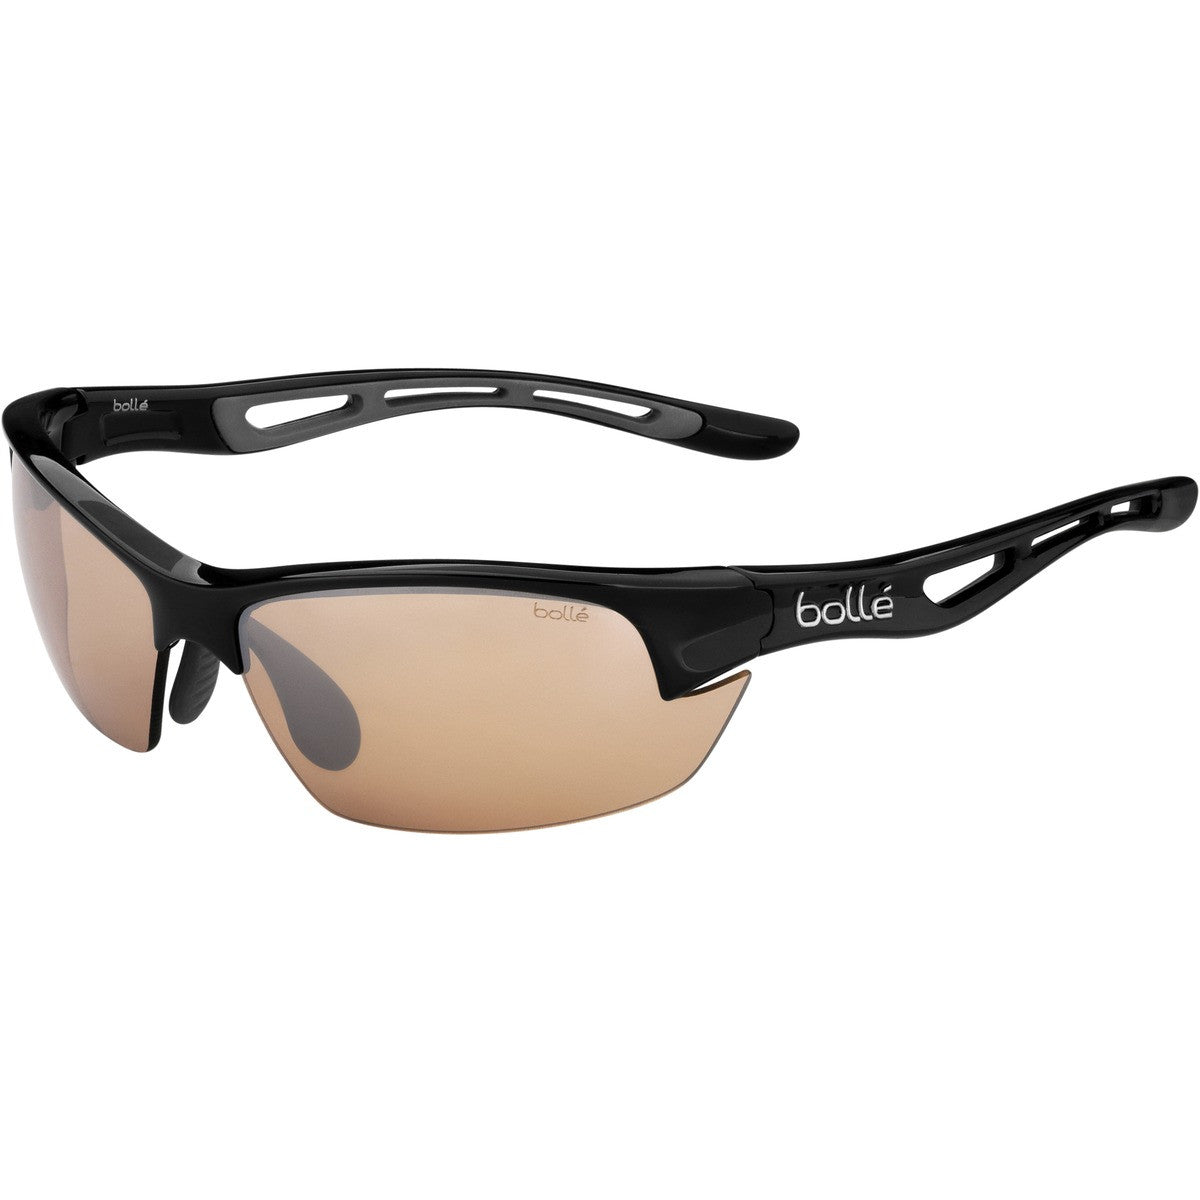 Bolle Bolt S Sunglasses  Black Shiny Small